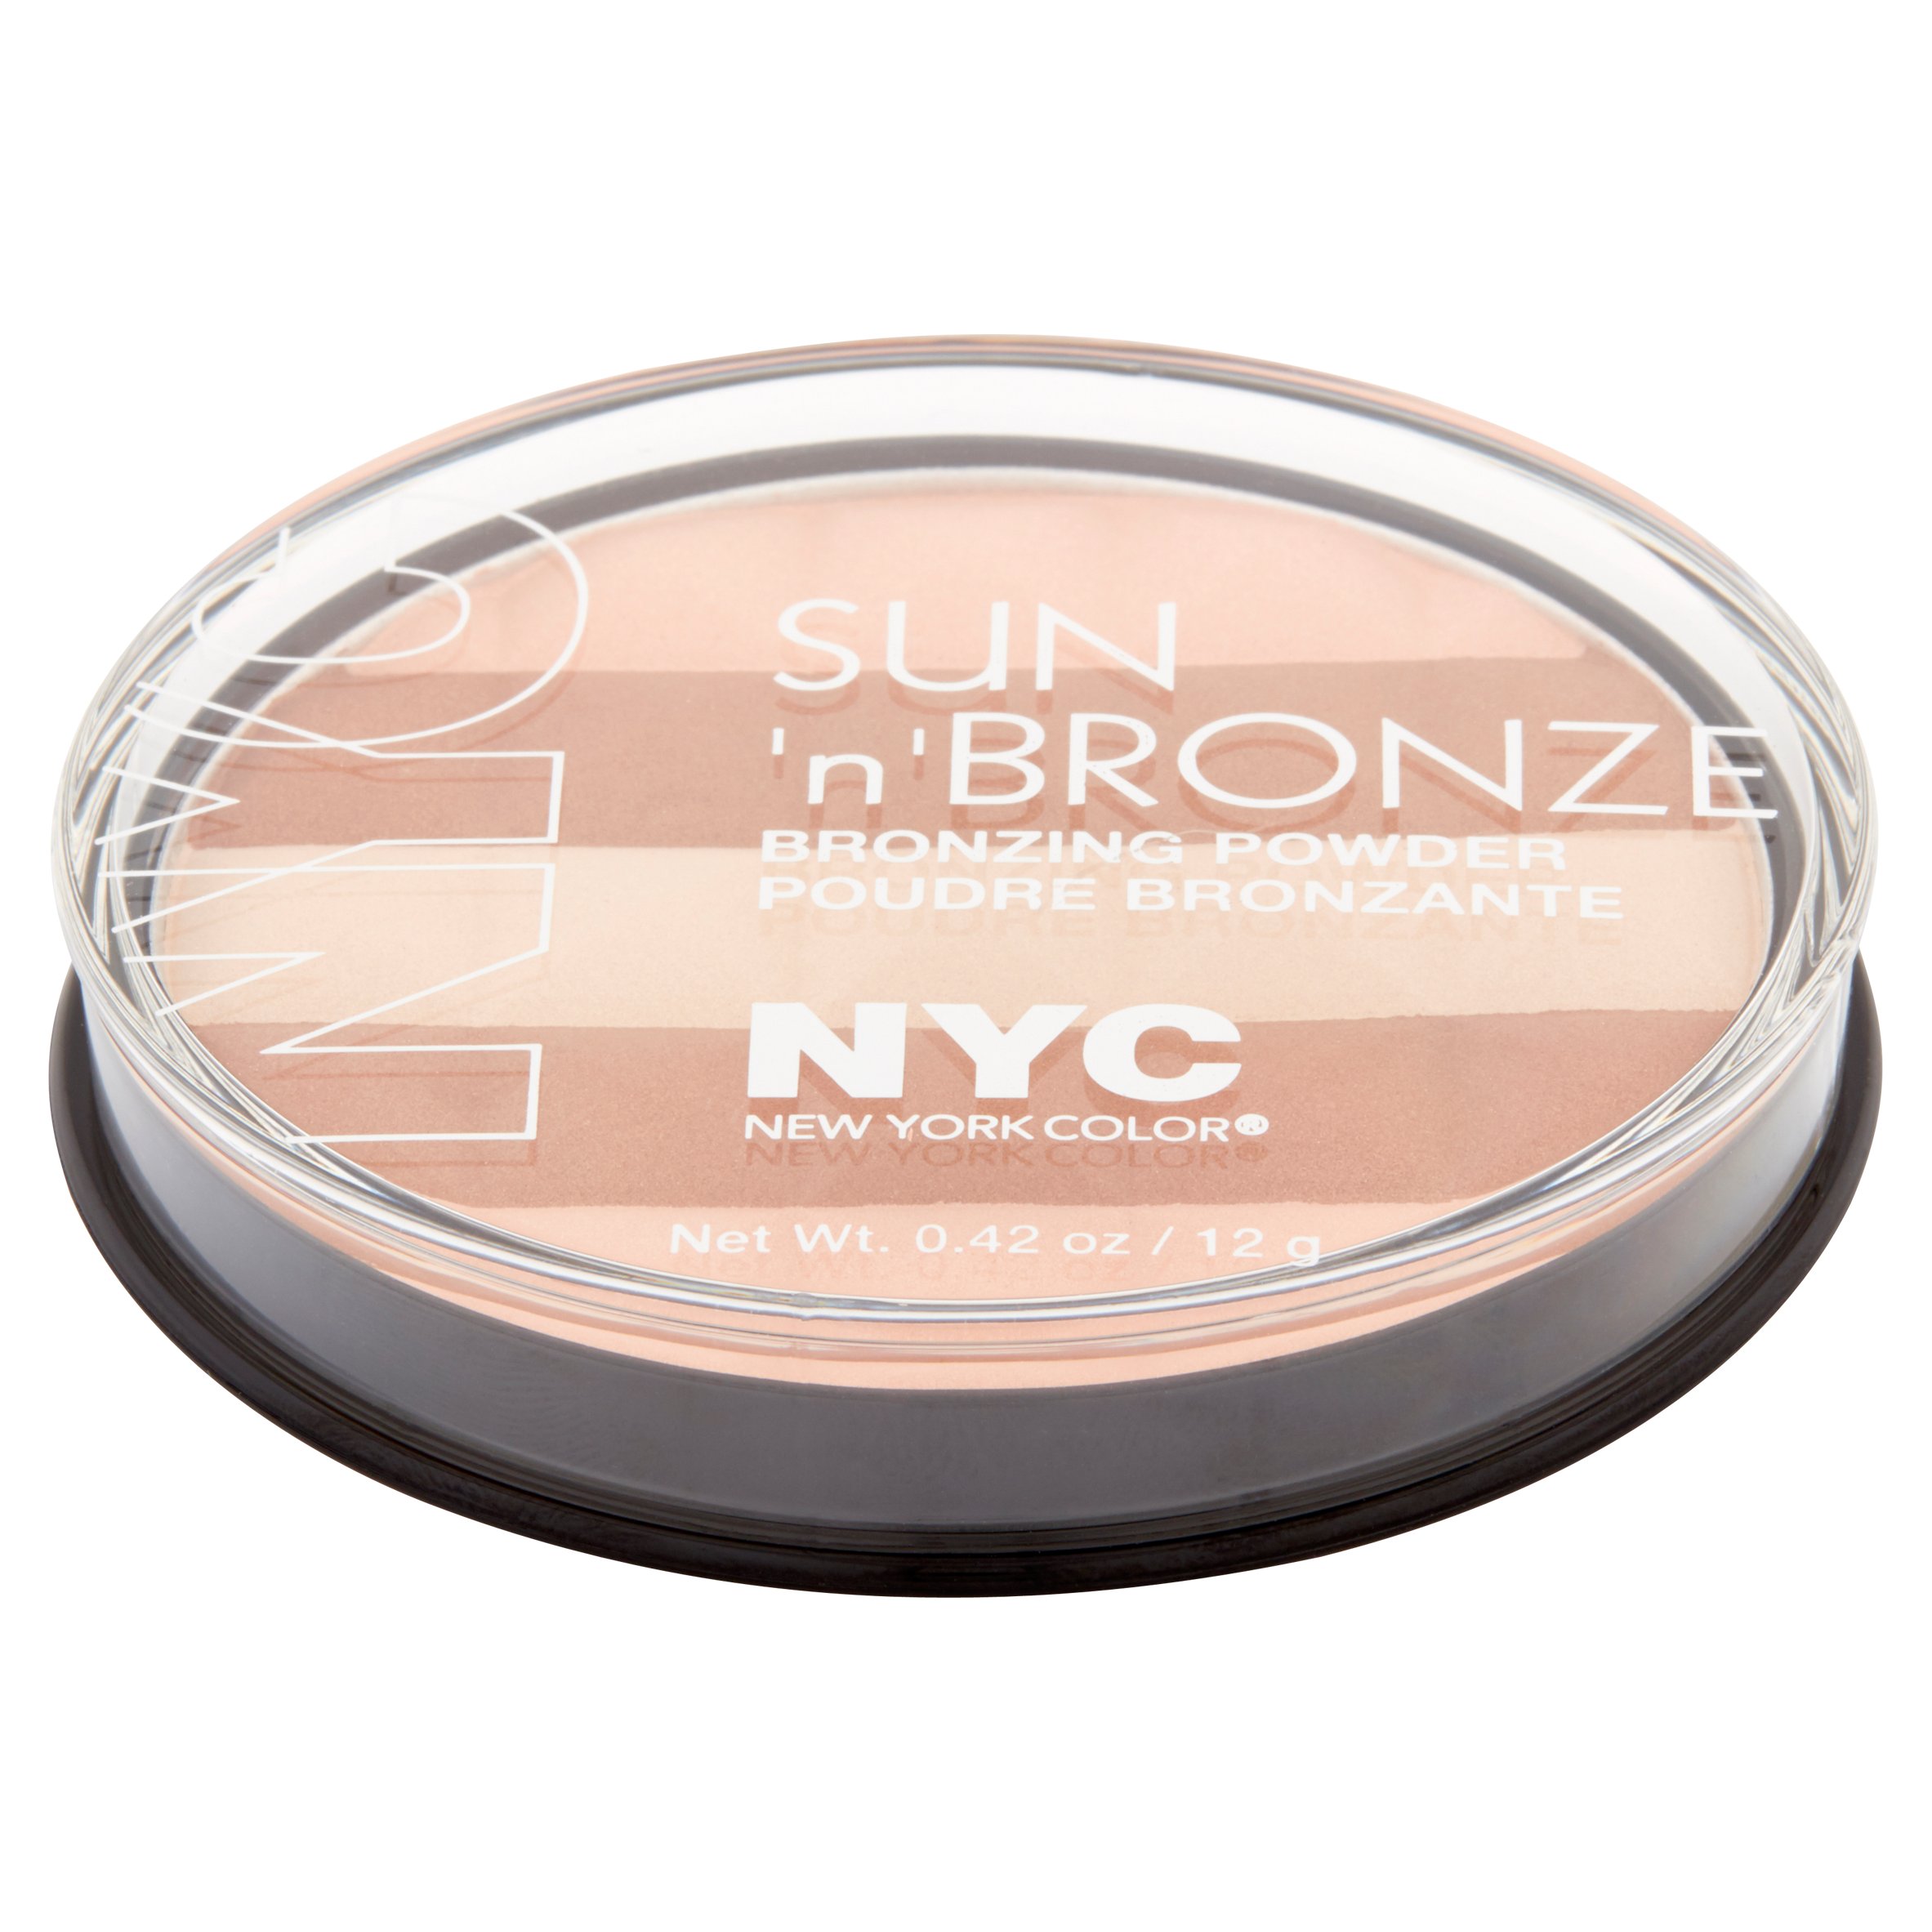 New york color sun 'n' bronze 706 hamptons radiance bronzing powder, 0.42 oz - image 2 of 5